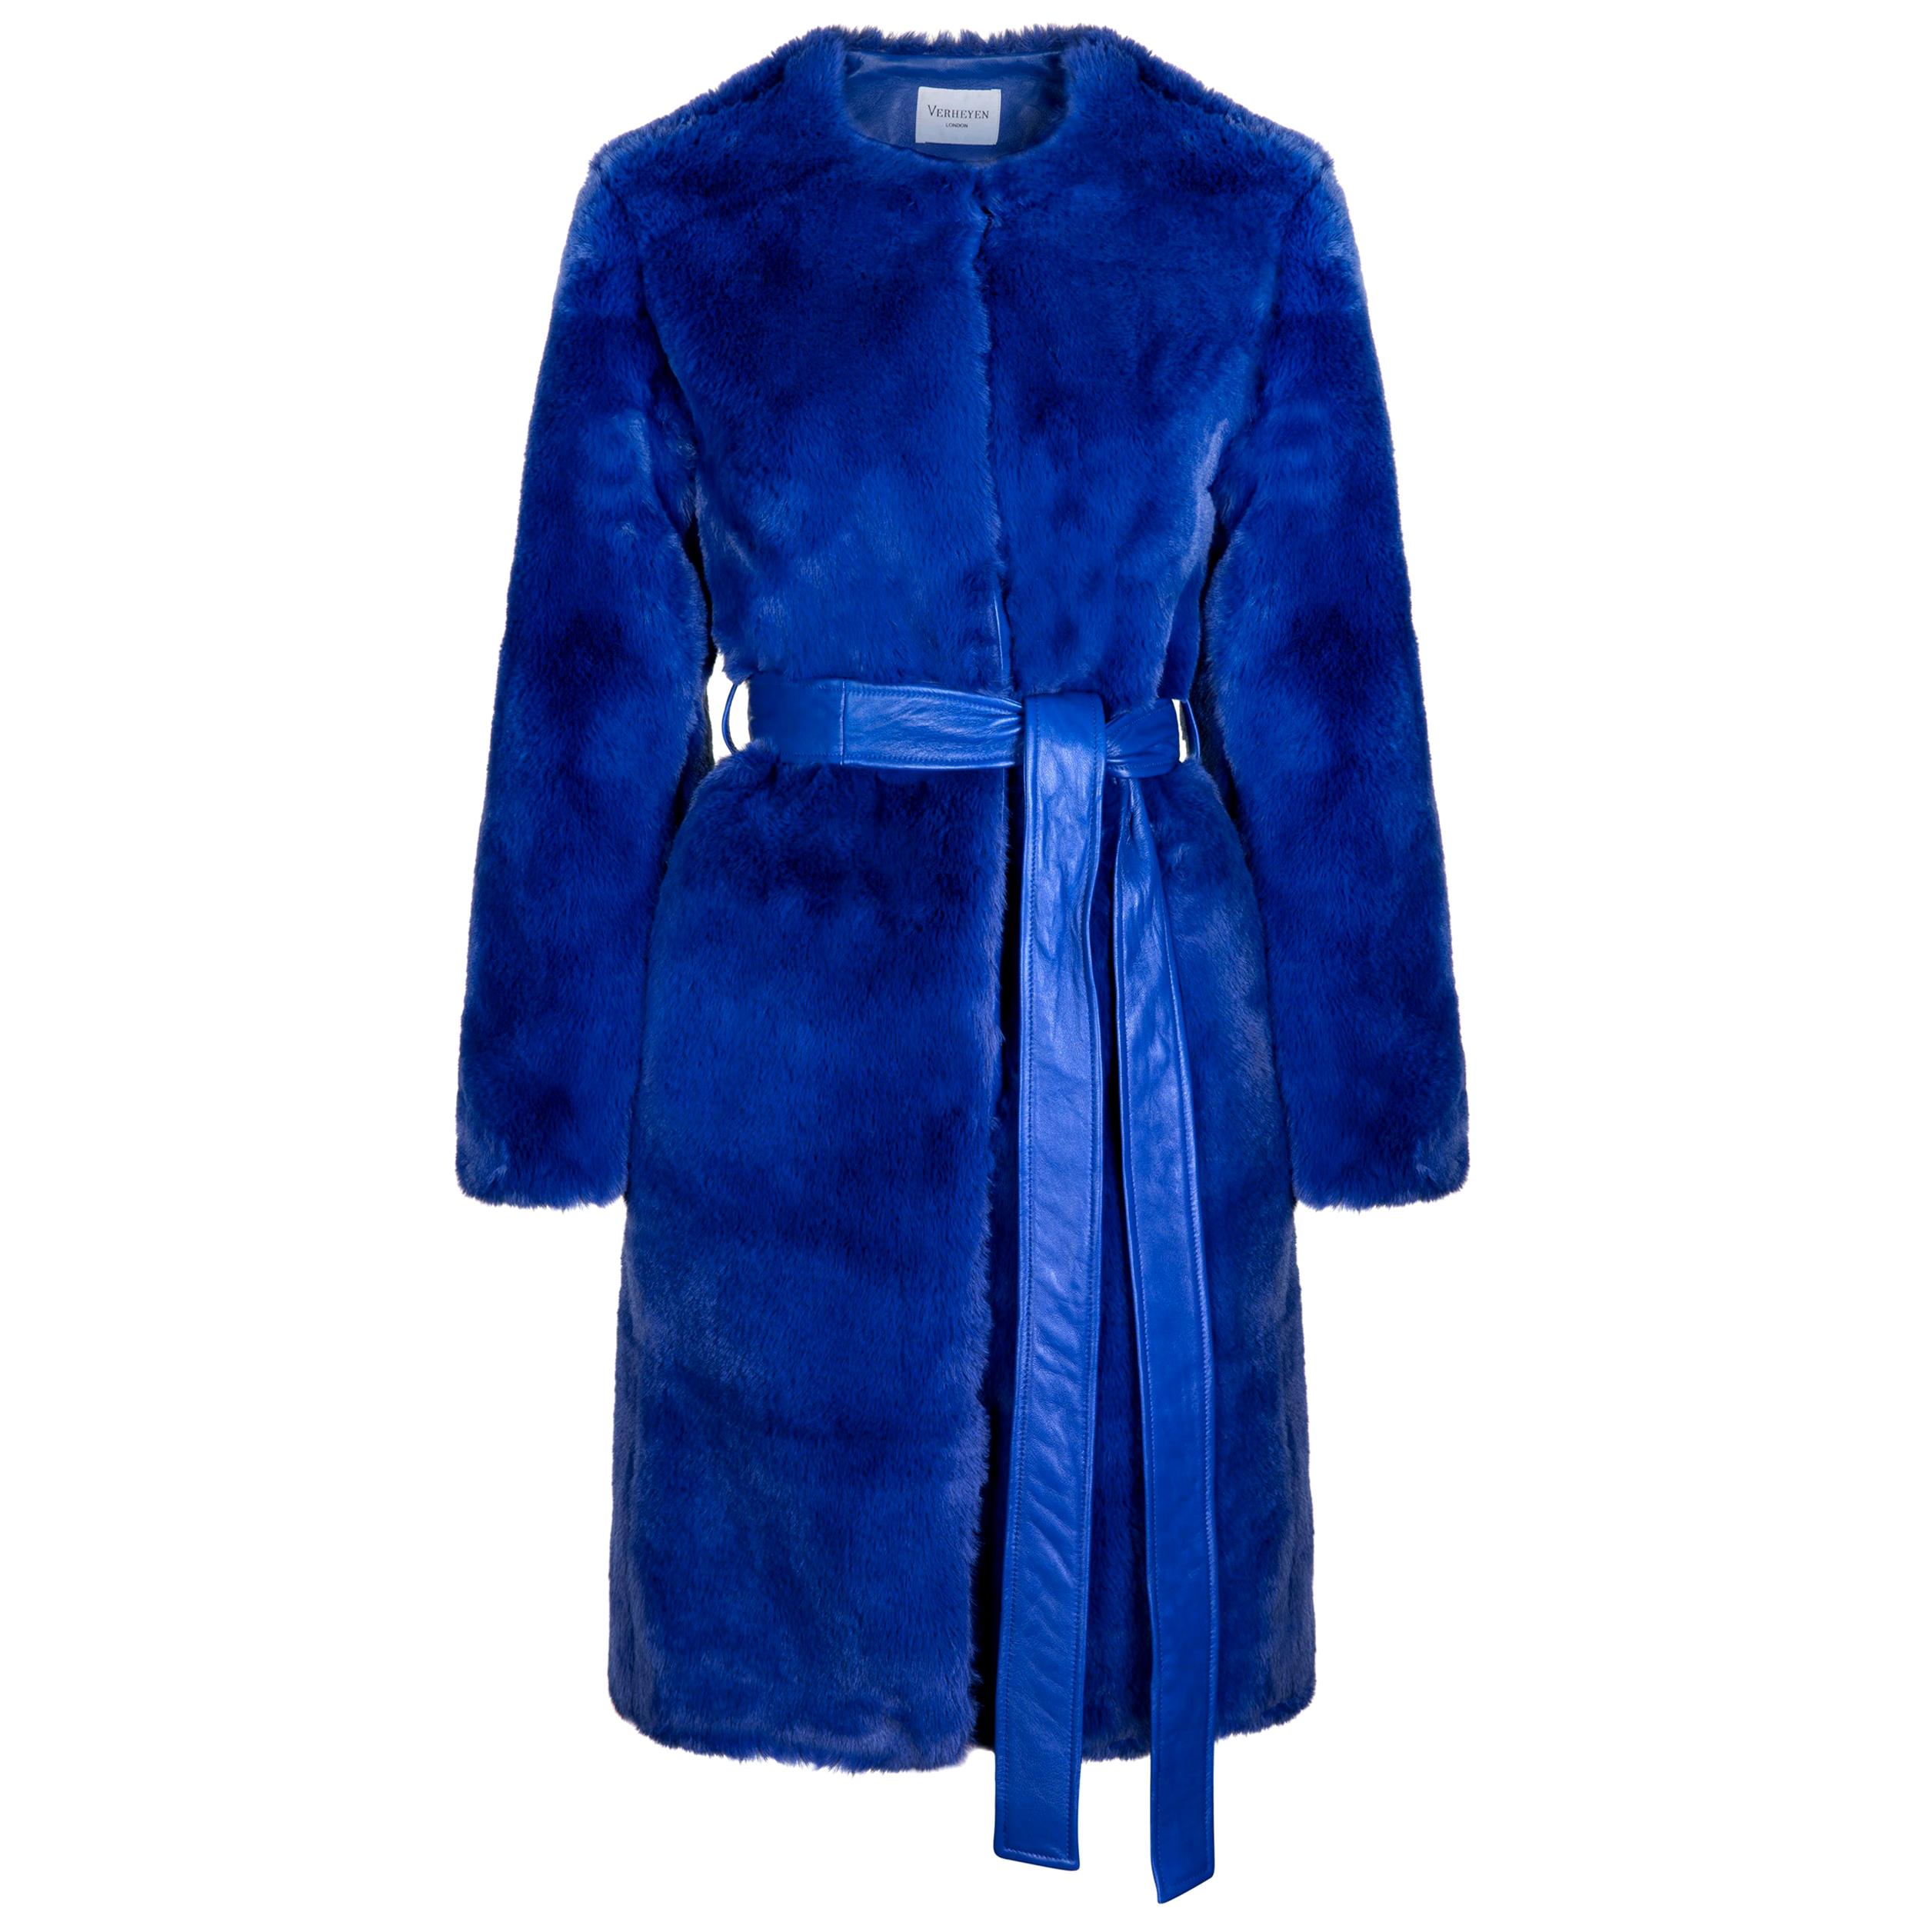 Verheyen London Serena  Collarless Faux Fur Coat in Blue - Size uk 10  For Sale